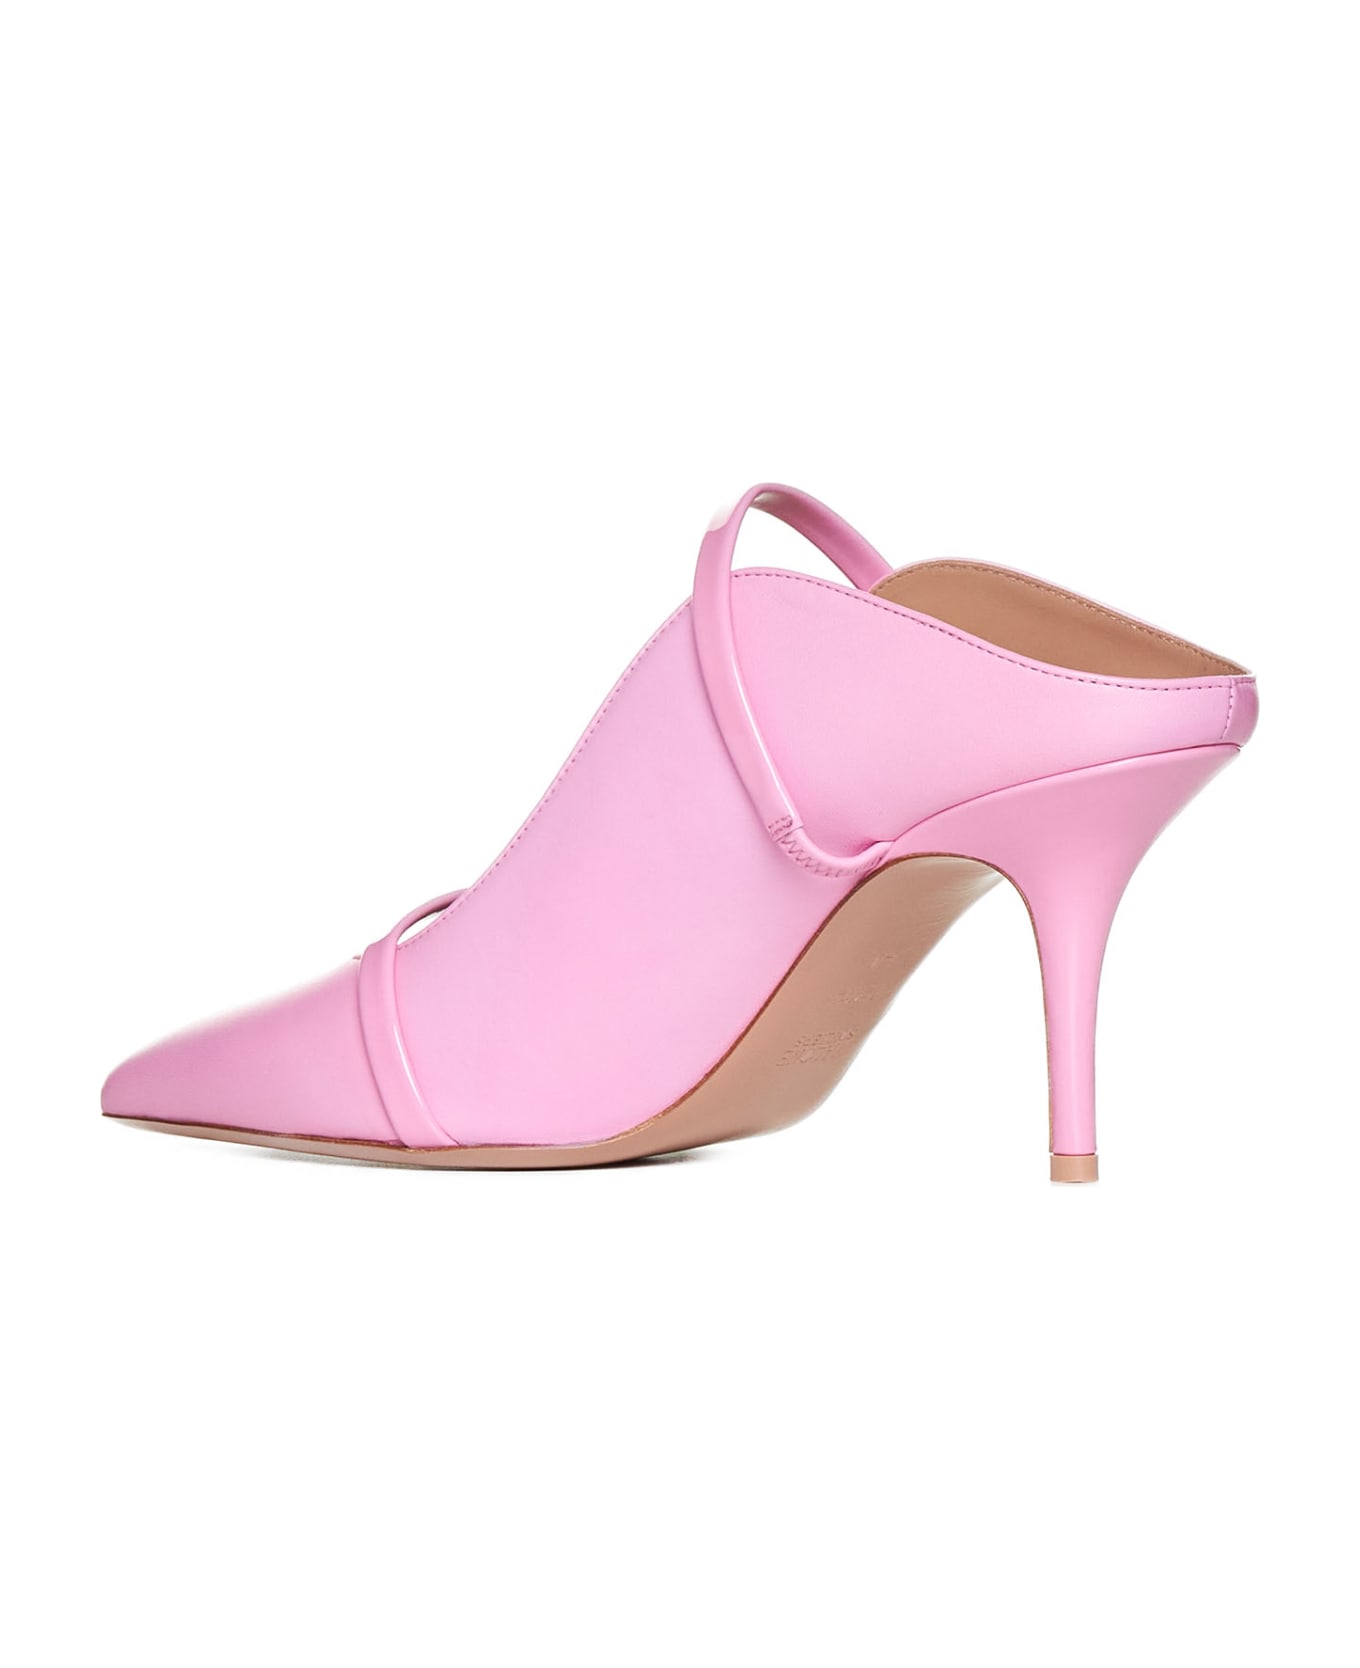 Malone Souliers Sandals - Flamingo/flamingo サンダル